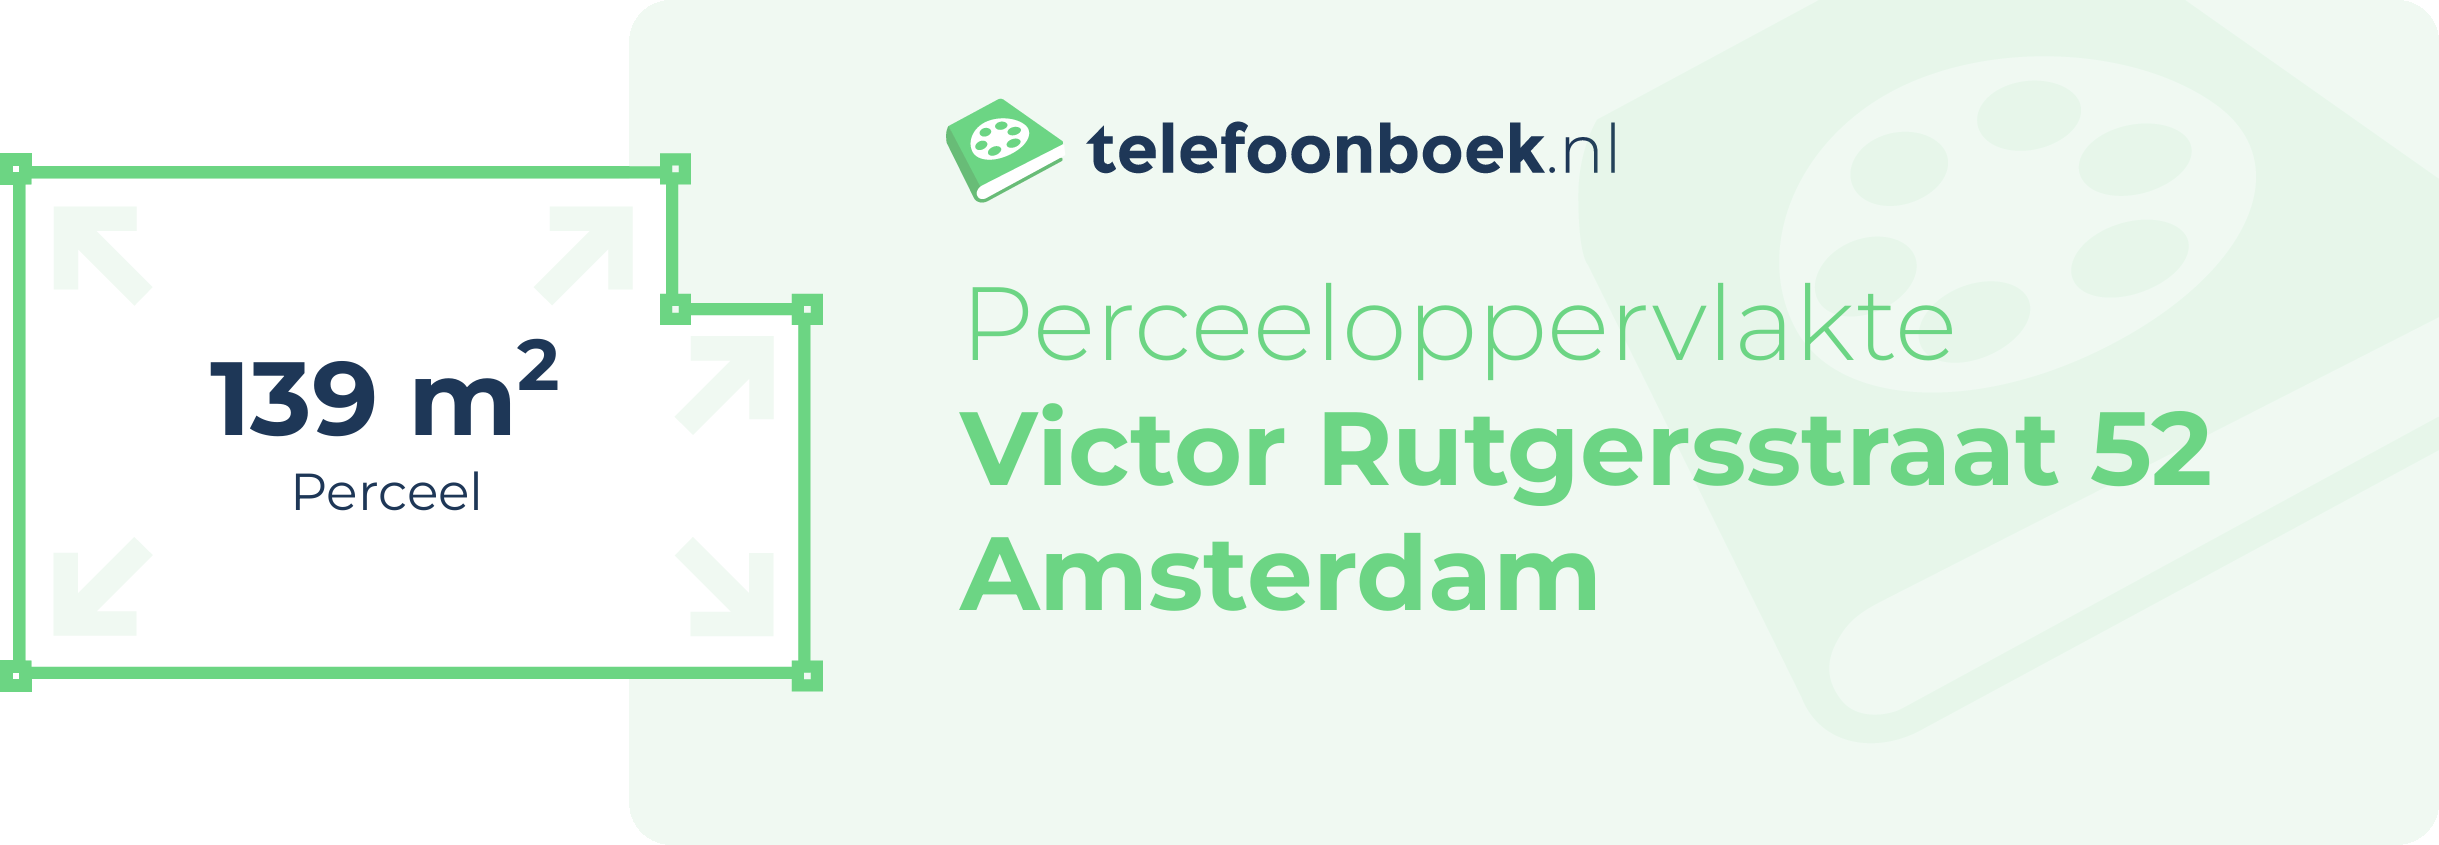 Perceeloppervlakte Victor Rutgersstraat 52 Amsterdam